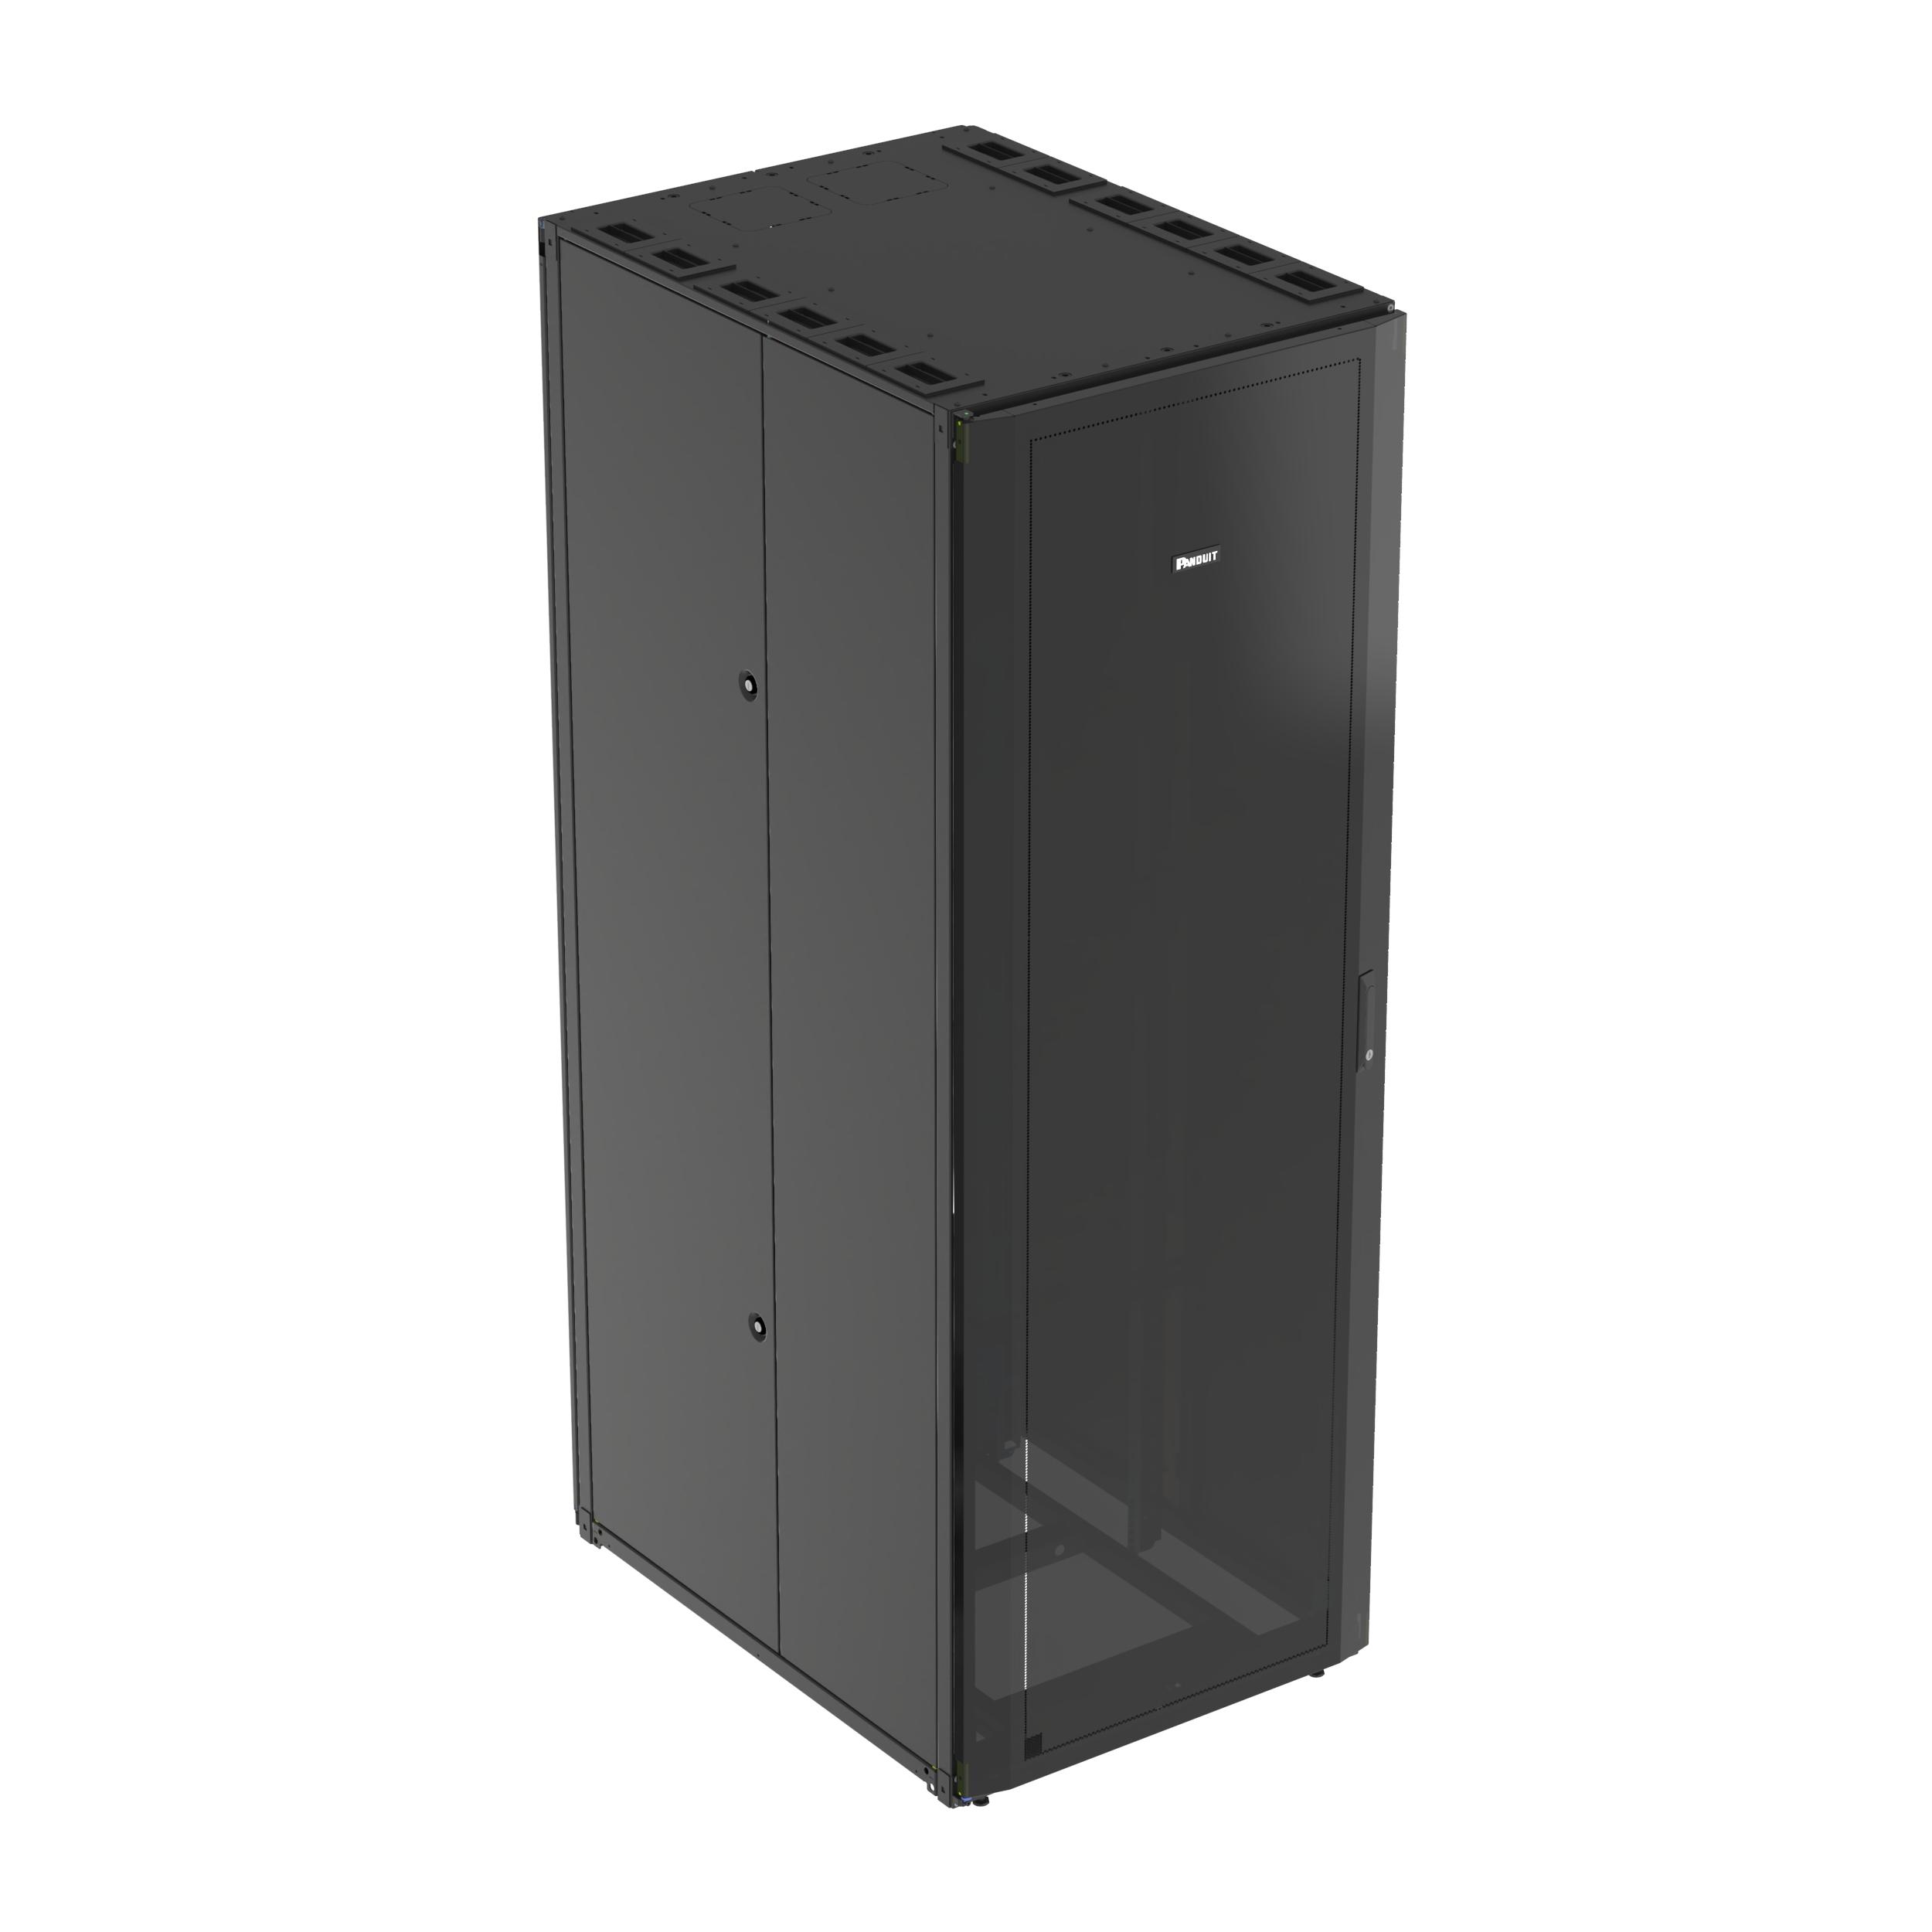 Panduit S7522BF Net-Access™ S-Type Cabinet